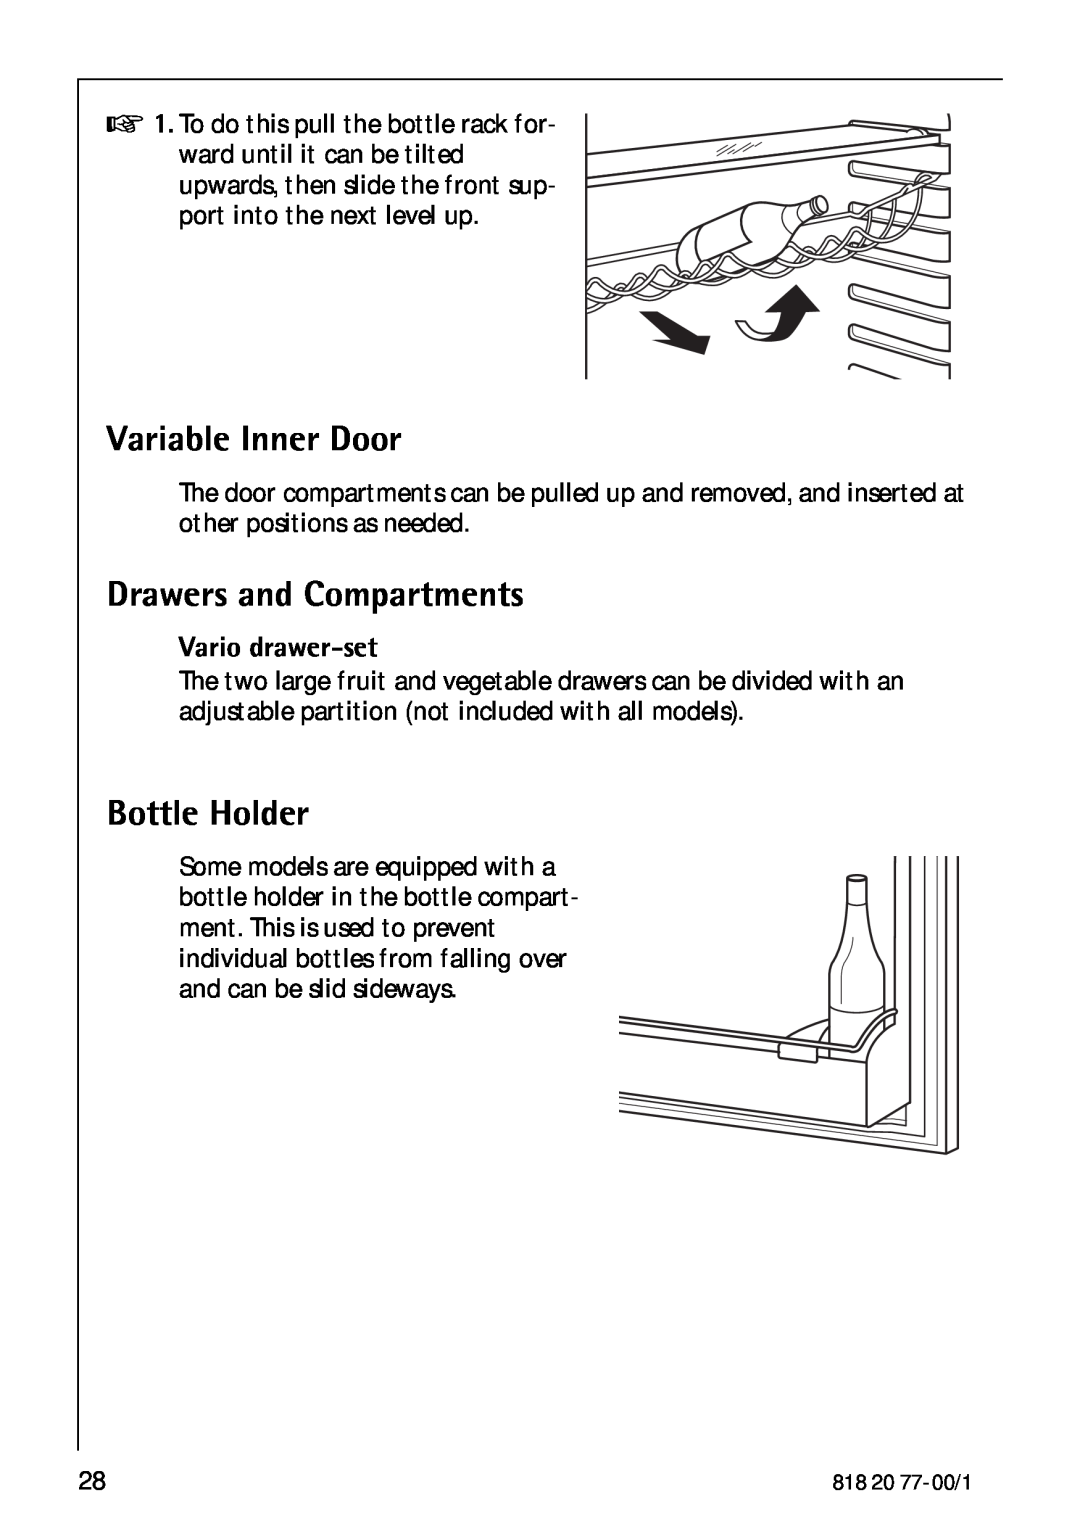 Electrolux 3985-7 KG manual Variable Inner Door, Drawers and Compartments, Bottle Holder, Vario drawer-set 